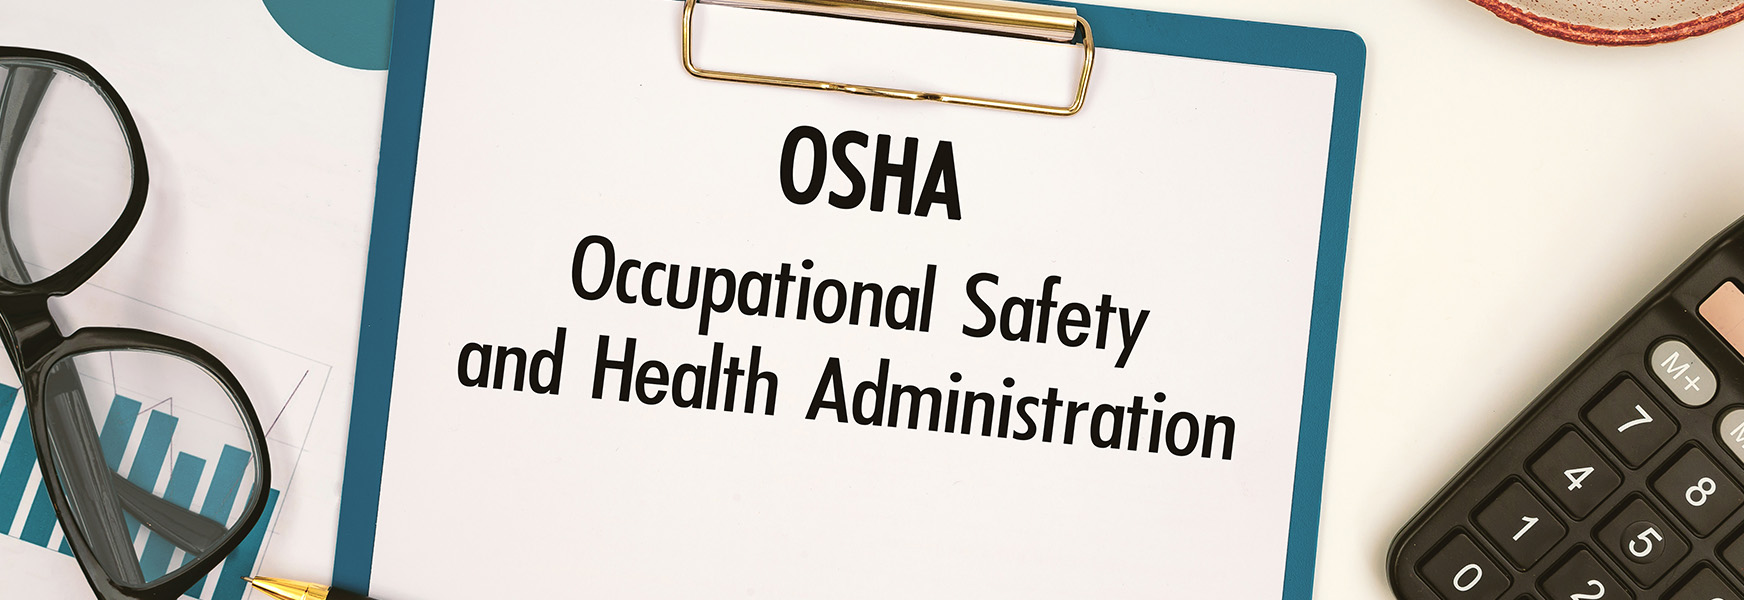 OSHA Recordkeeping Clipboard